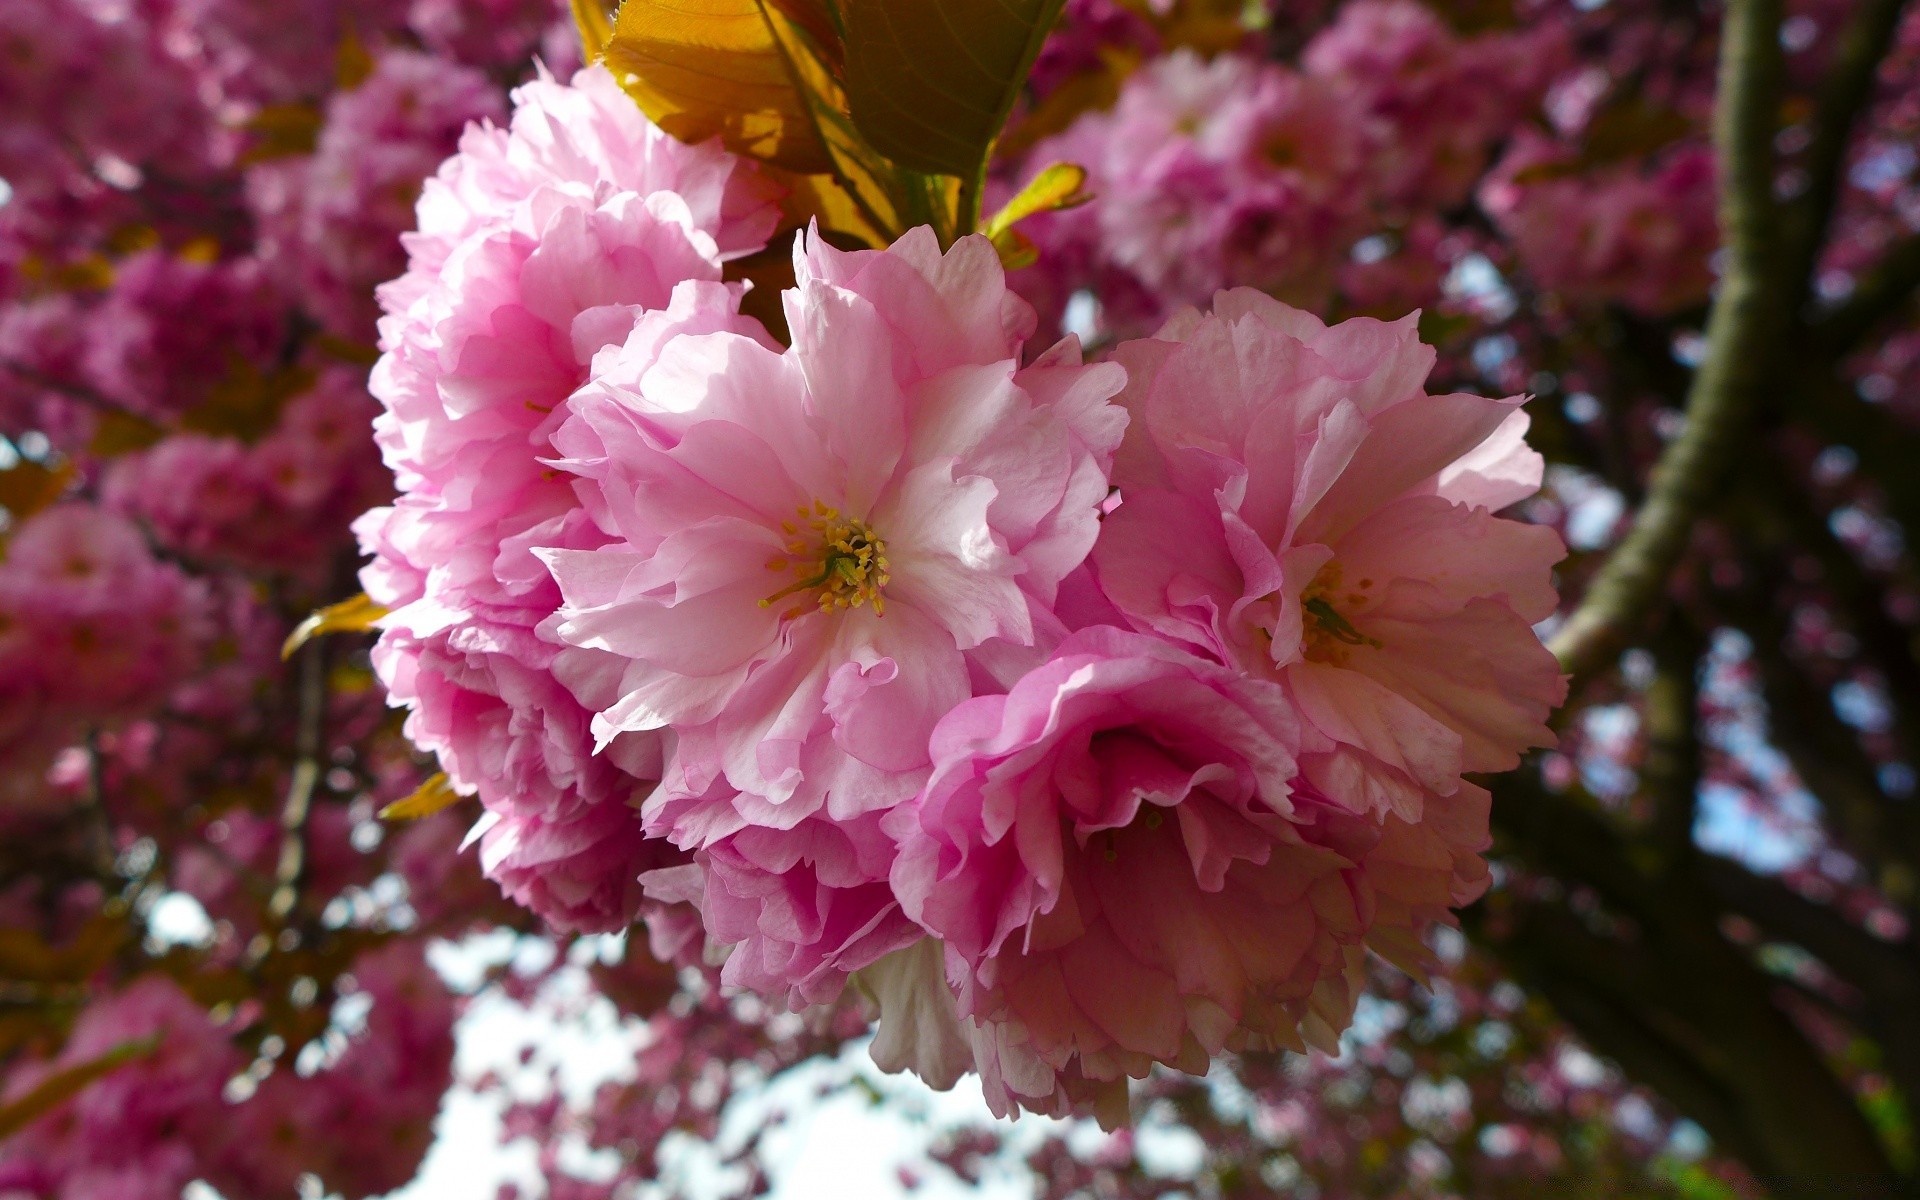 весна цветок природа сад флора блюминг дерево лист цвет лепесток цветочные филиал вишня сезон красивые роза парк дружище лето яркий